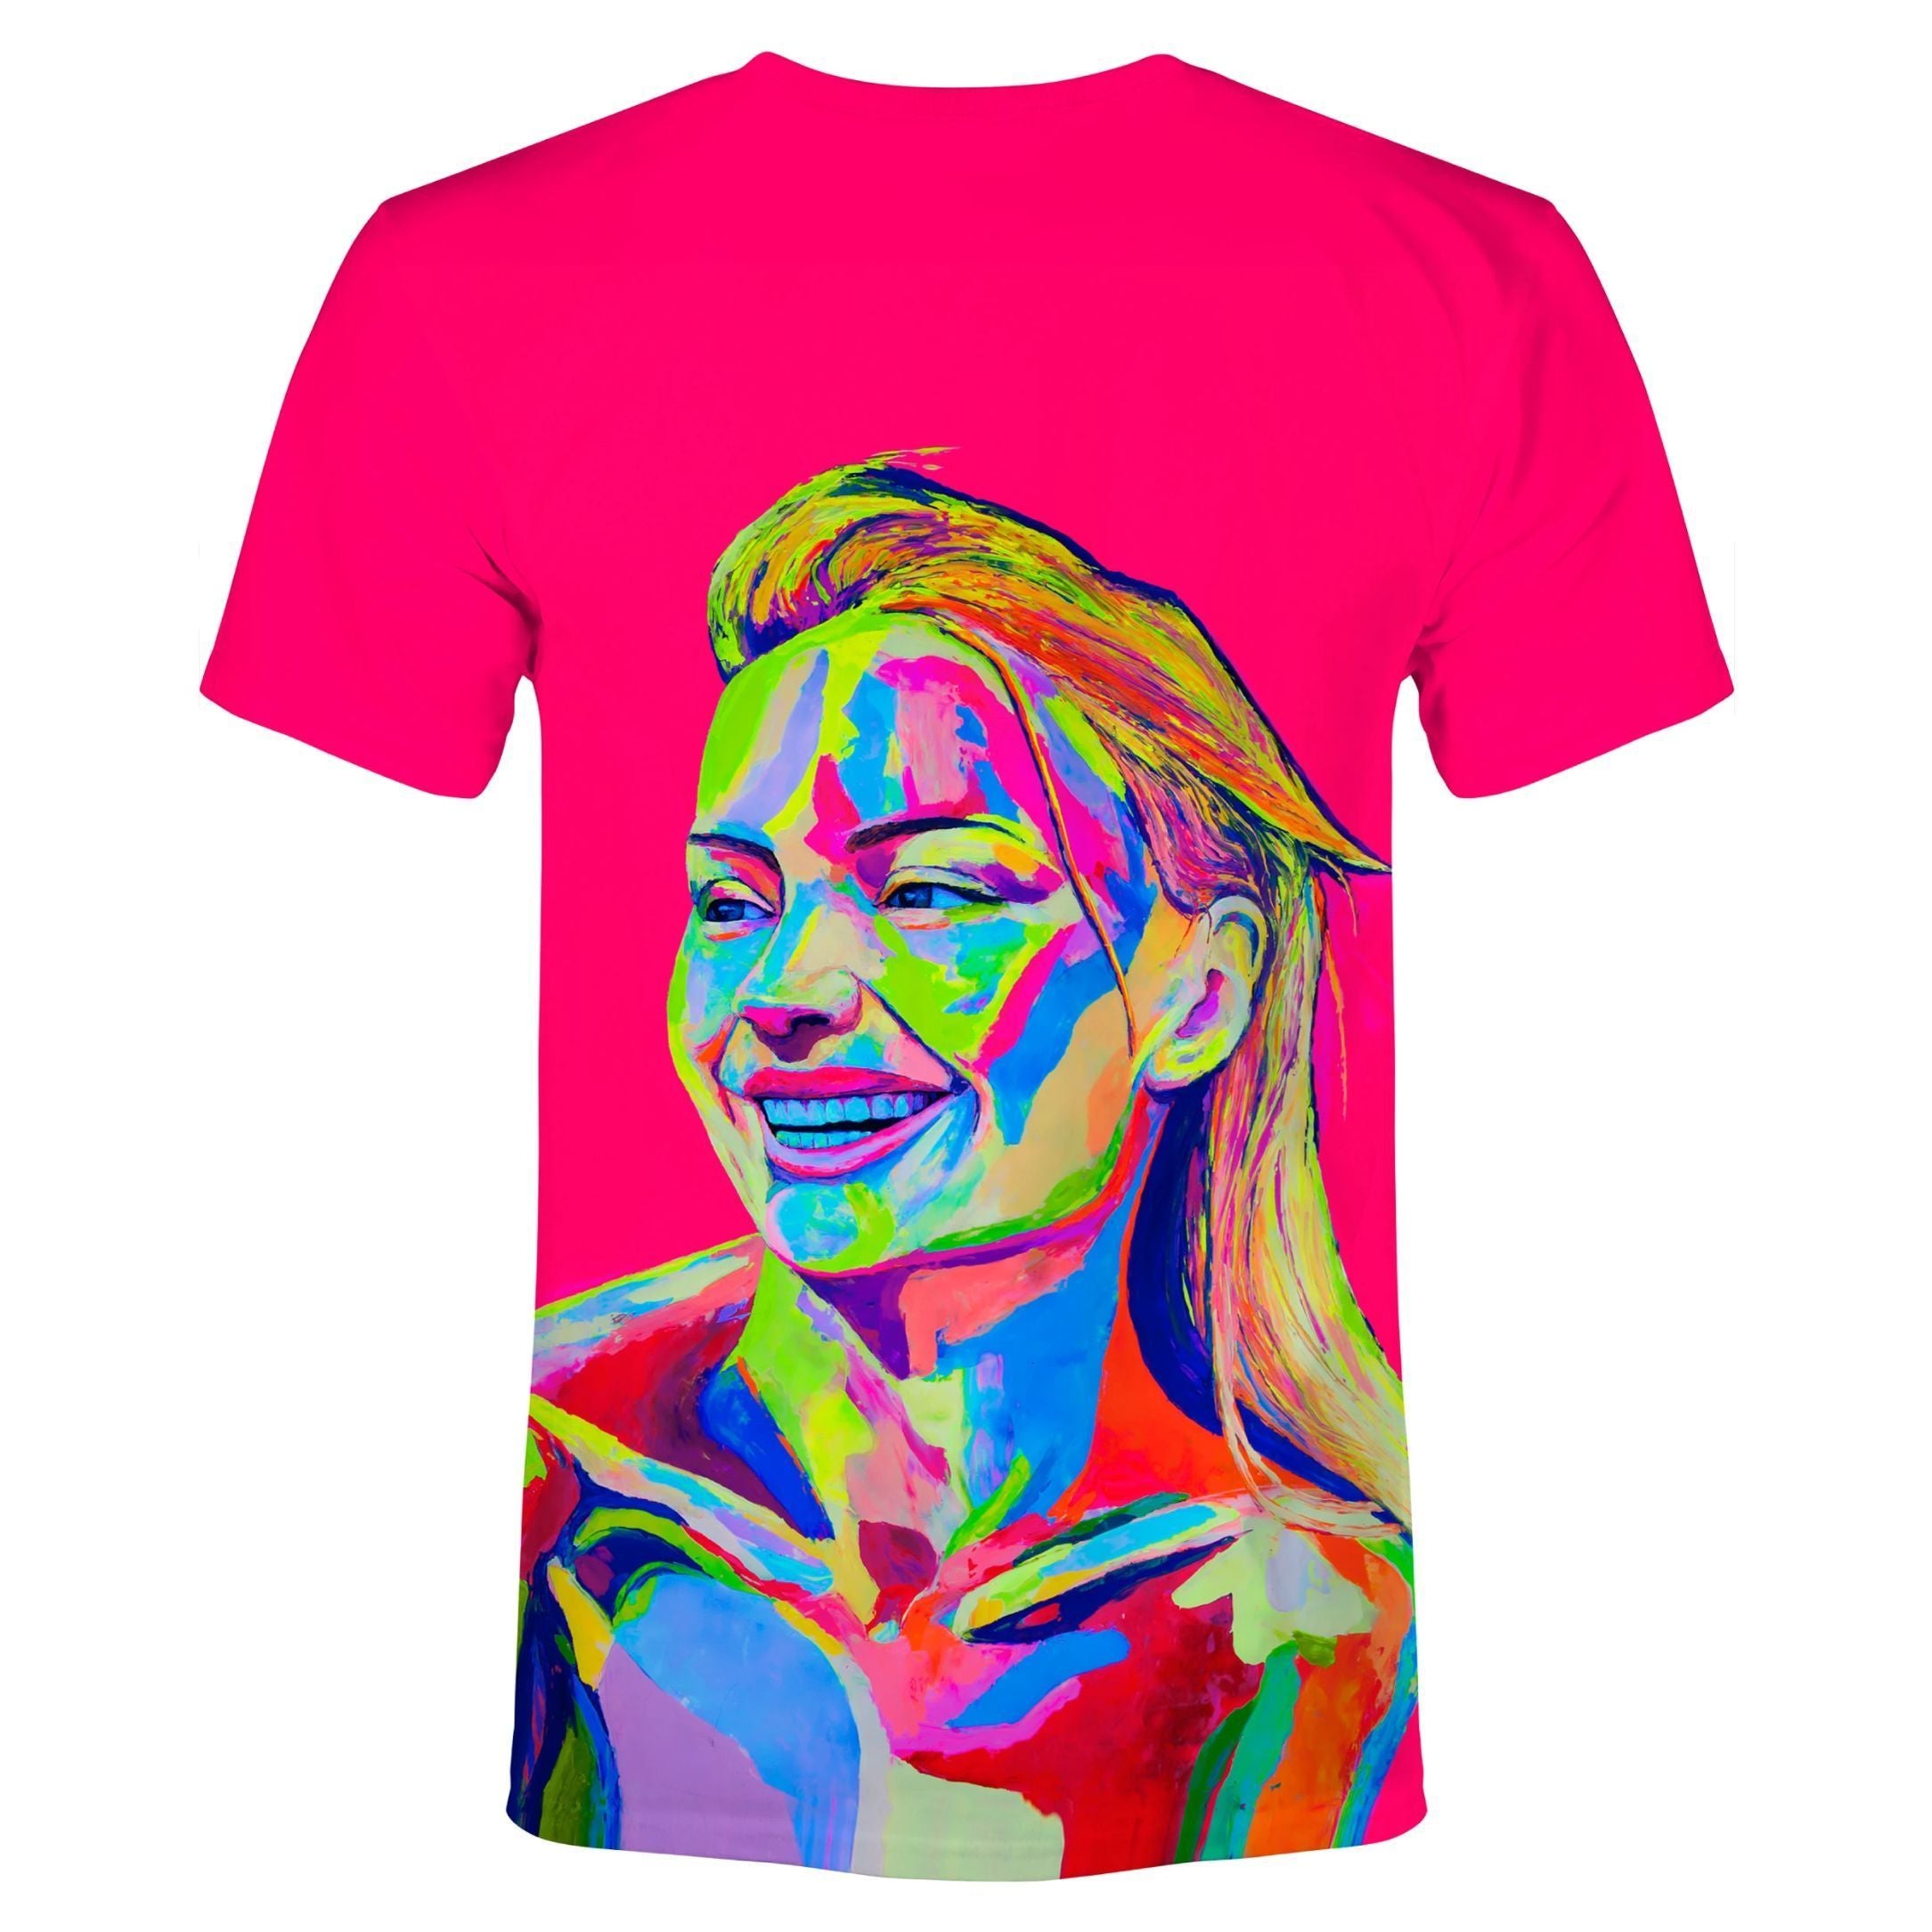 UV Reactive T-Shirt Printing Blacklight Reactive Party Rave Pink Girl ts12